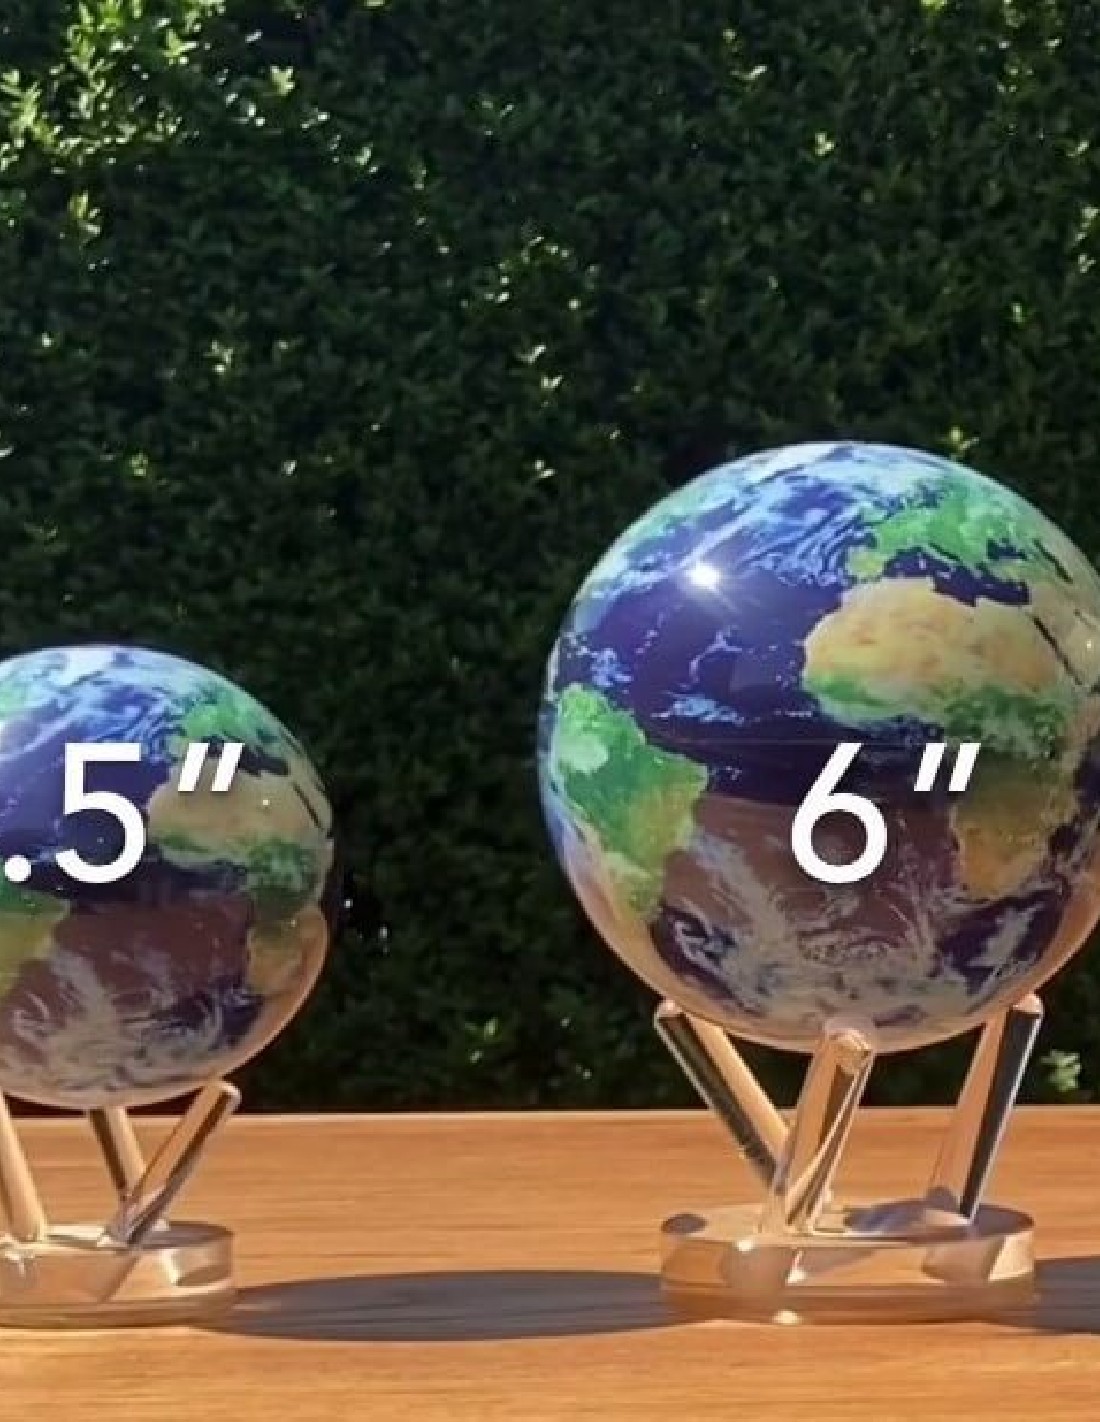 Globe Mova en rotation Terre bleu avec relief 4.5